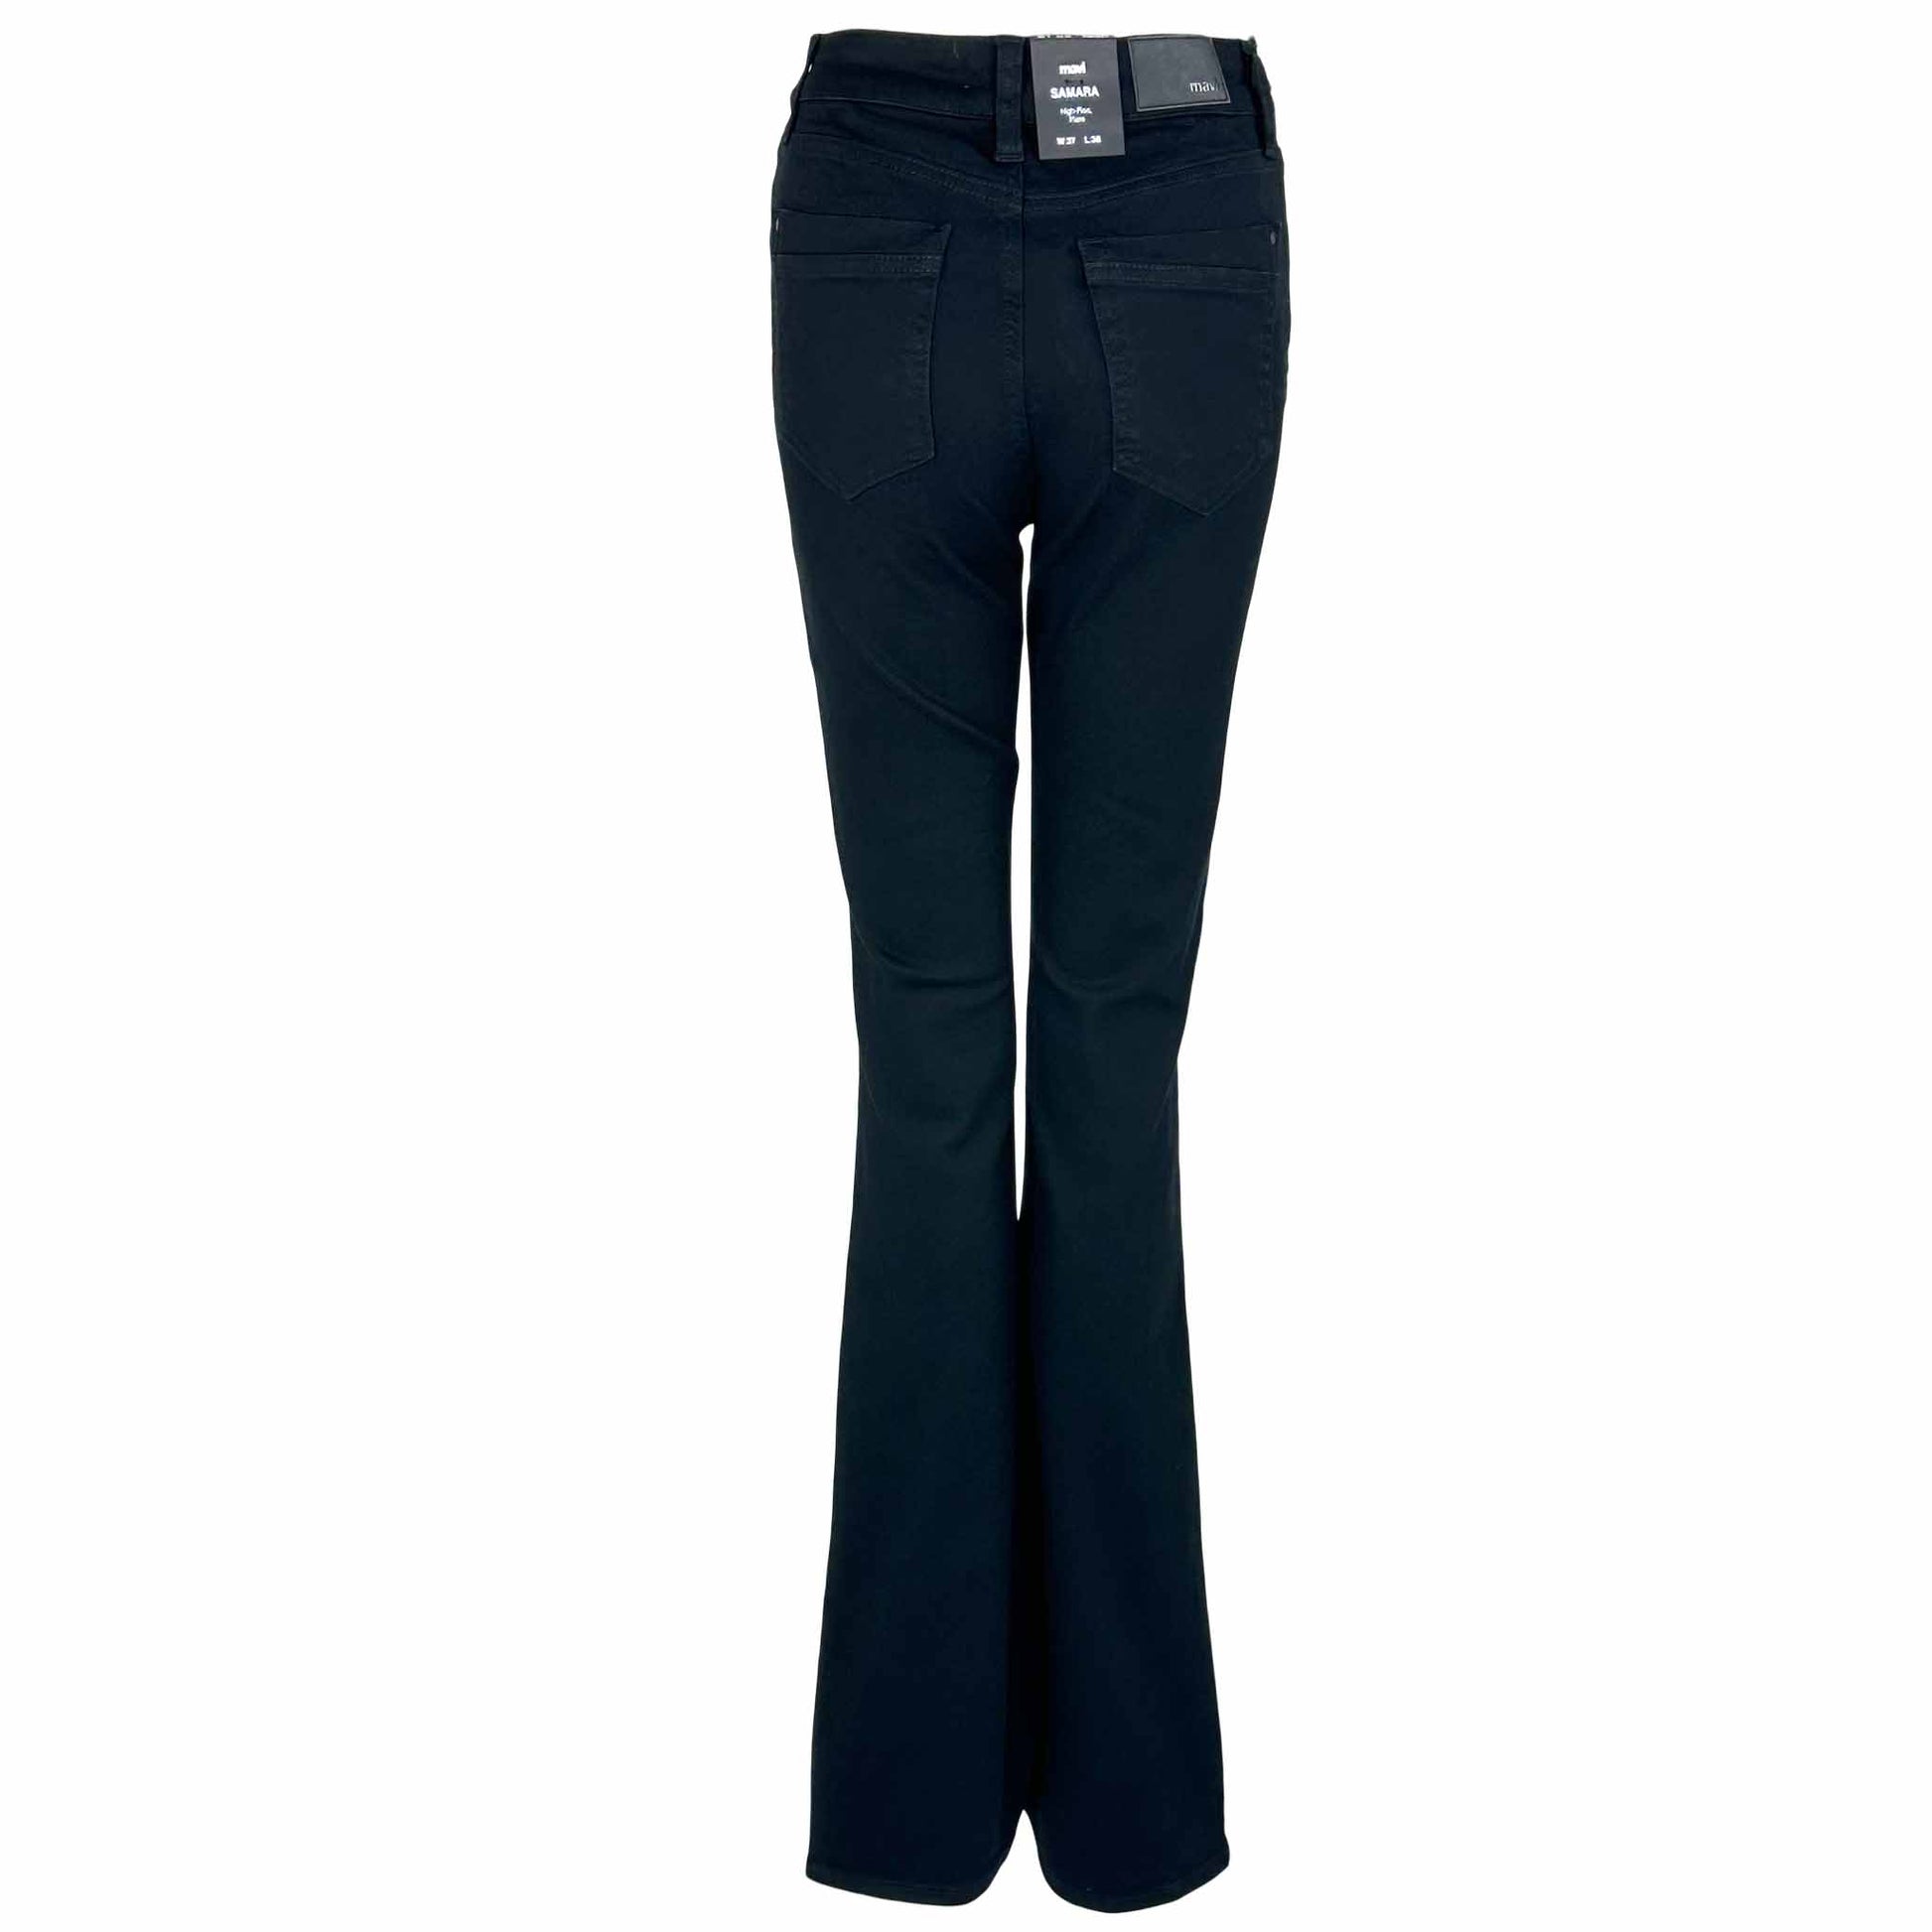 kleding lange vrouwen mavi jeans samara black glam